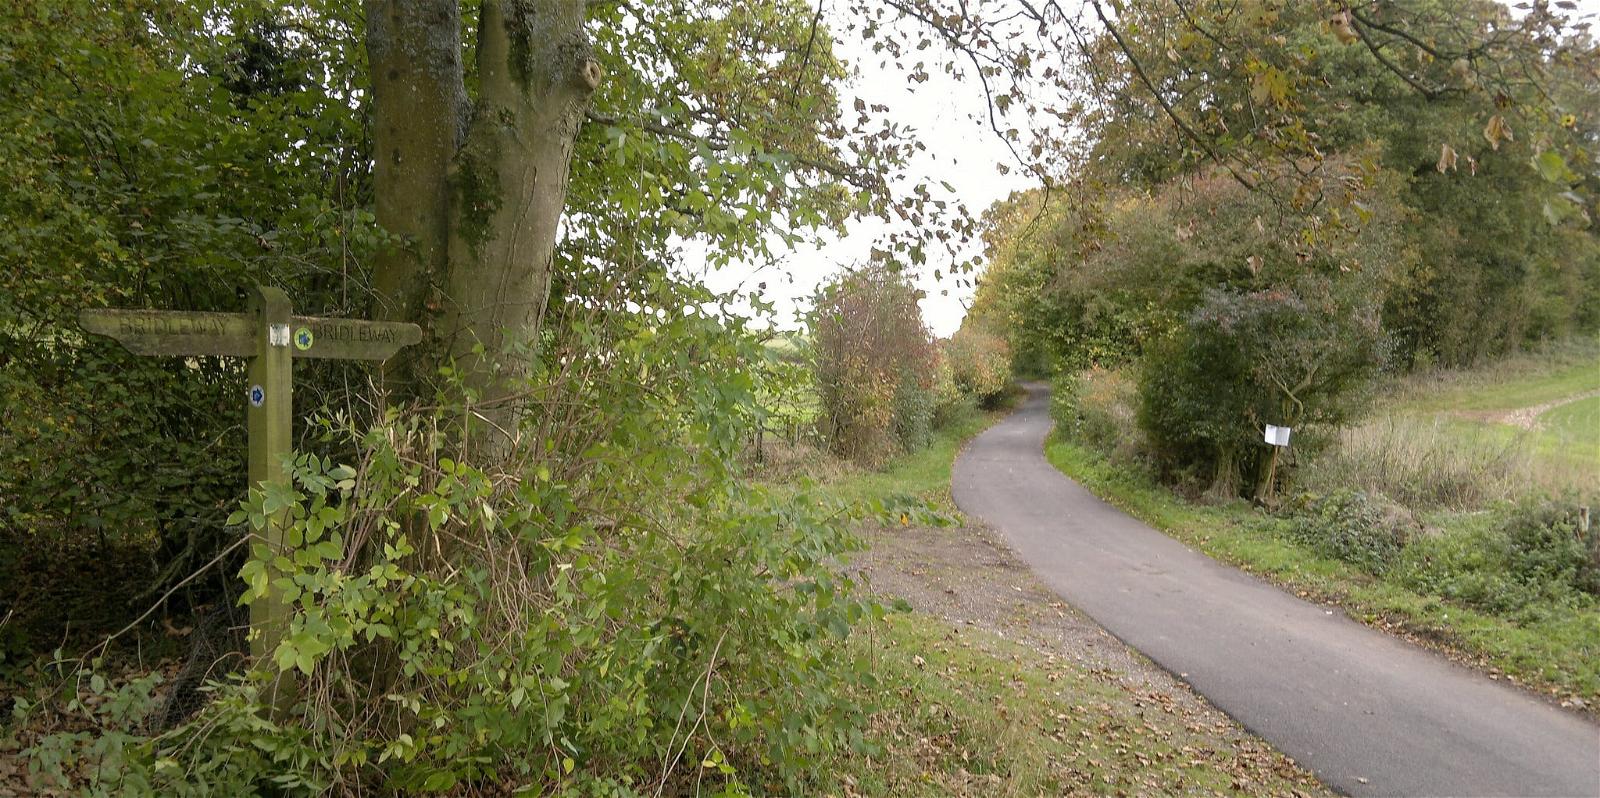 Billede af Portway. uk england sign hampshire bridleway hants publicbridleway cyclingdiscoveries mapmyride:route=1043529039